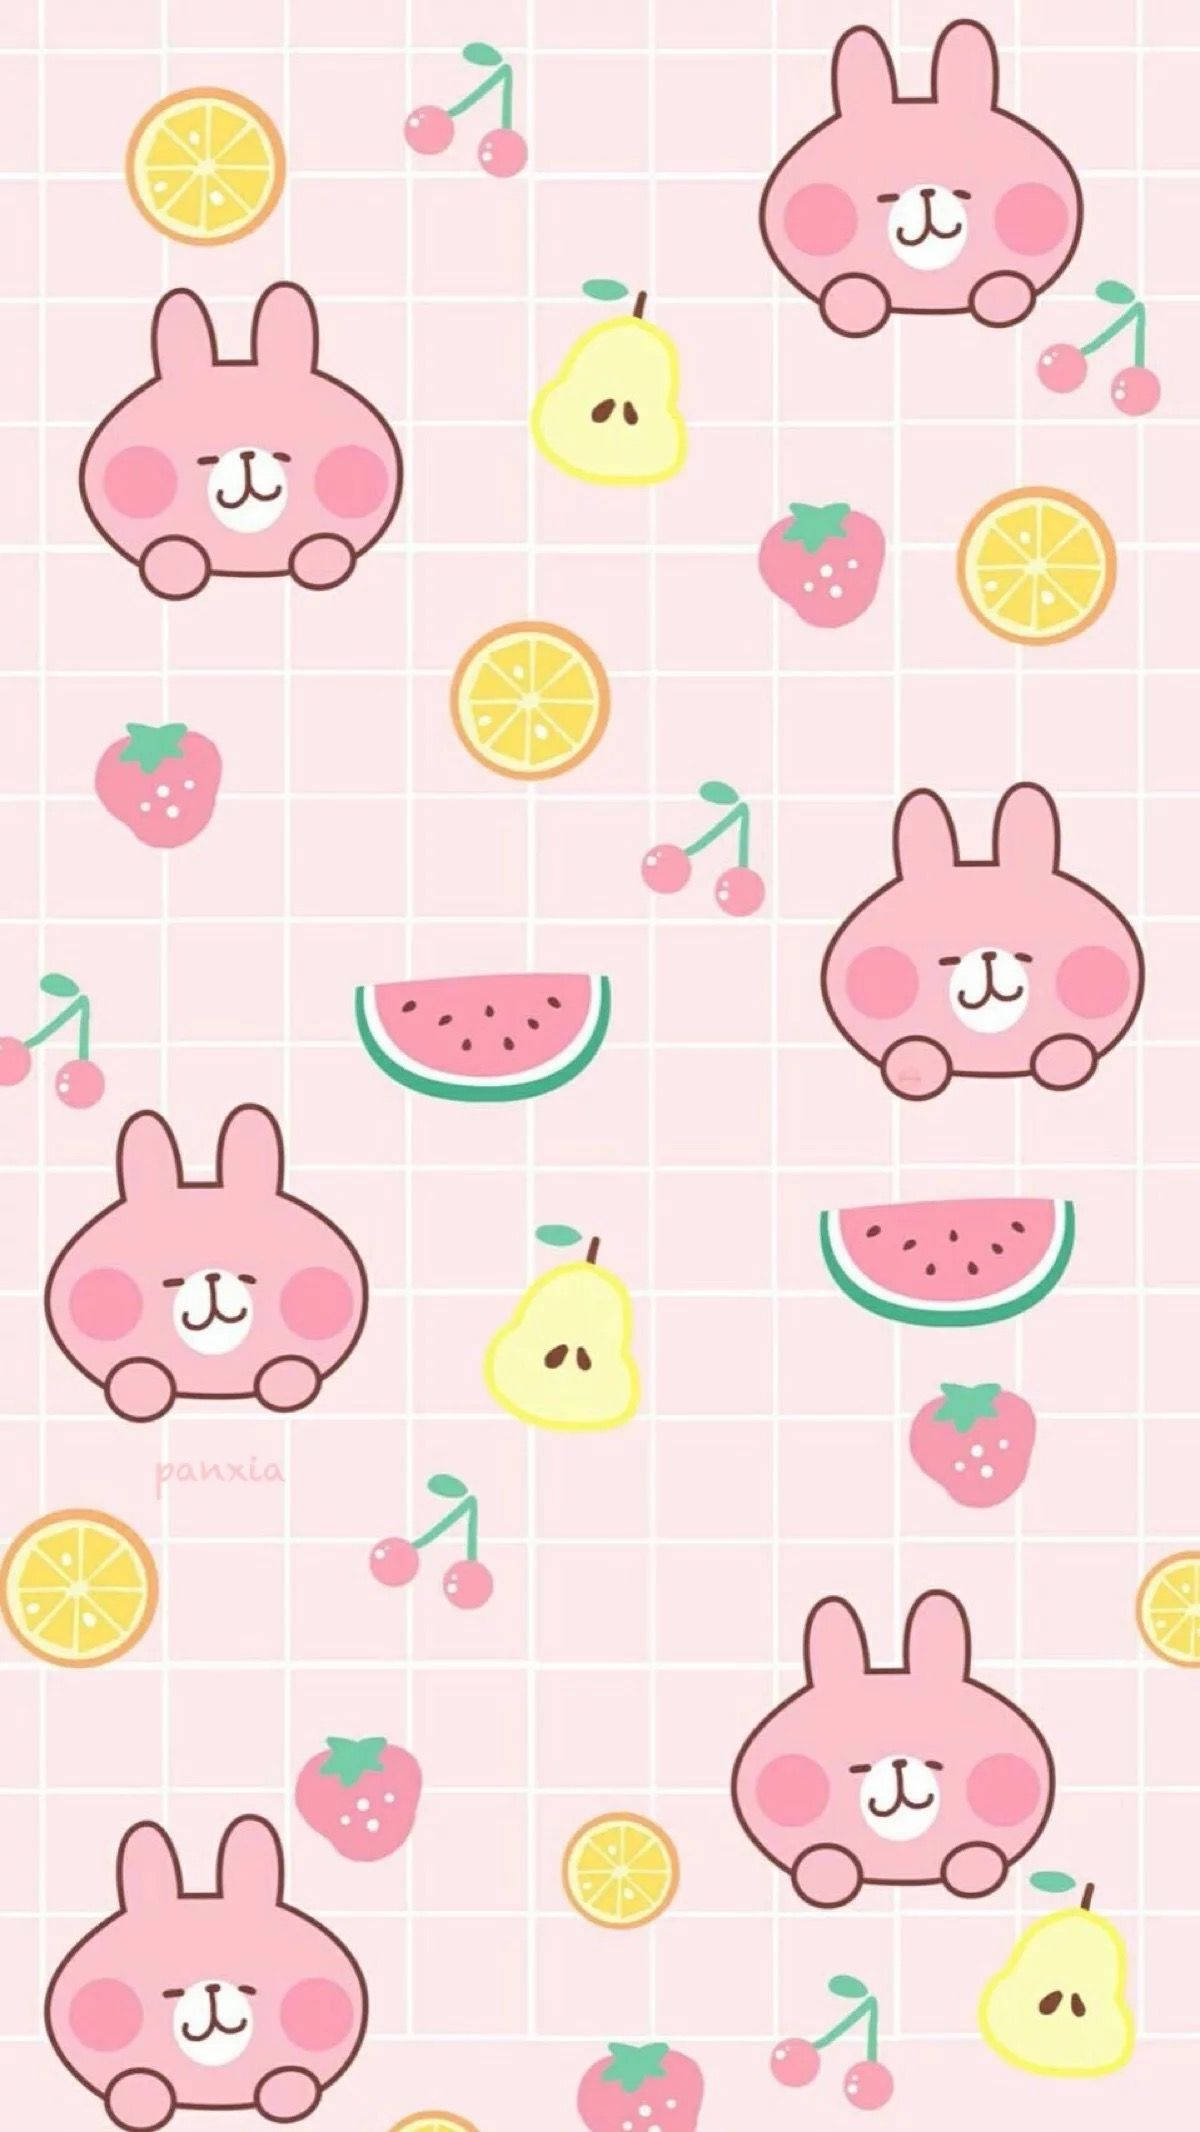 Download Kawaii Pink Rabbit And Fruits Collage Wallpaper | Wallpapers.com